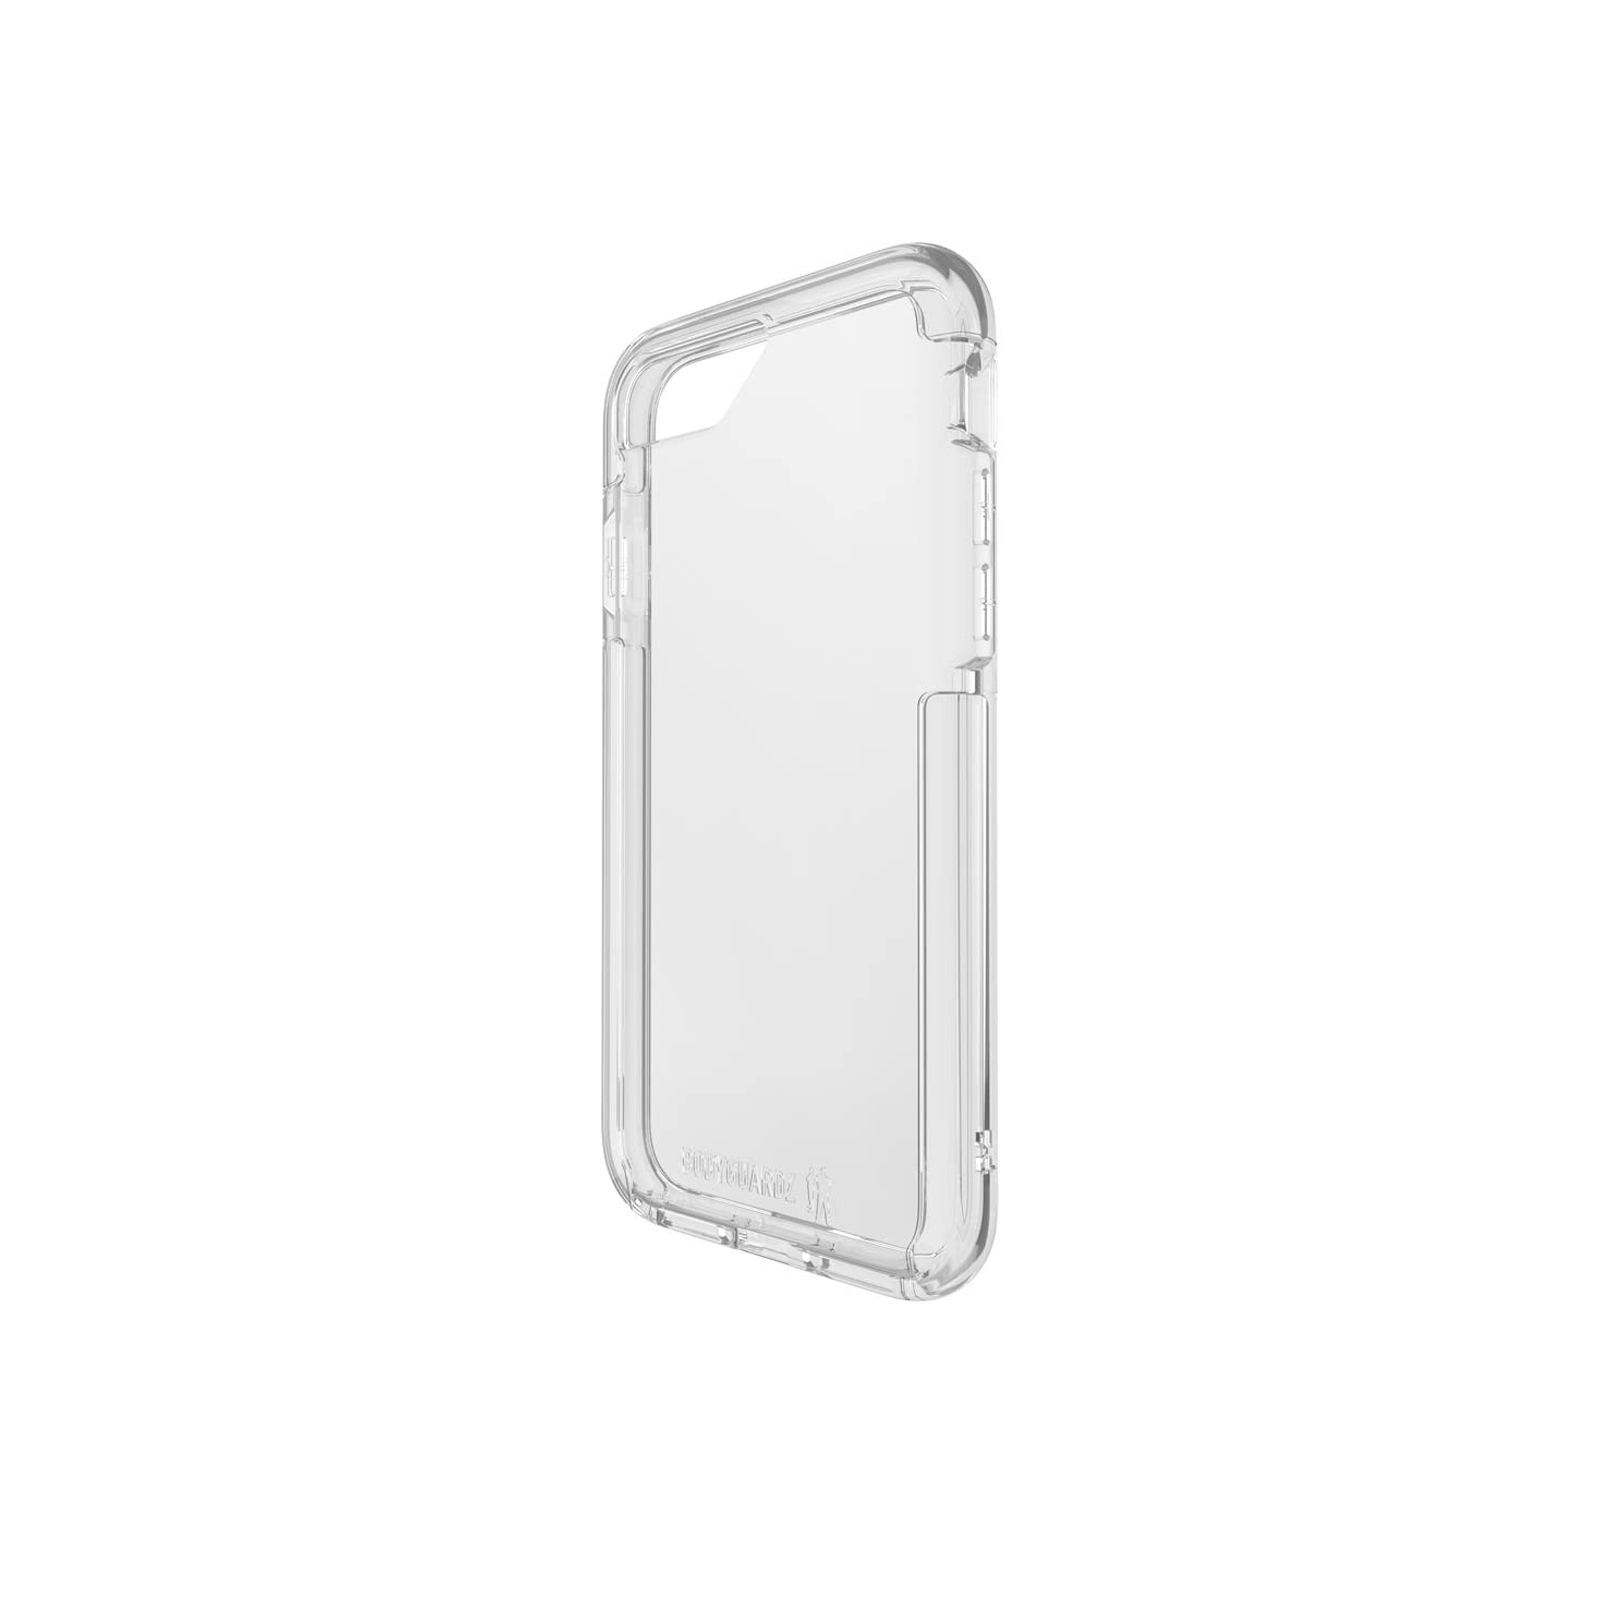 BodyGuardz AcePro iPhone 6/7/8 Case [Clear] [Brand New]